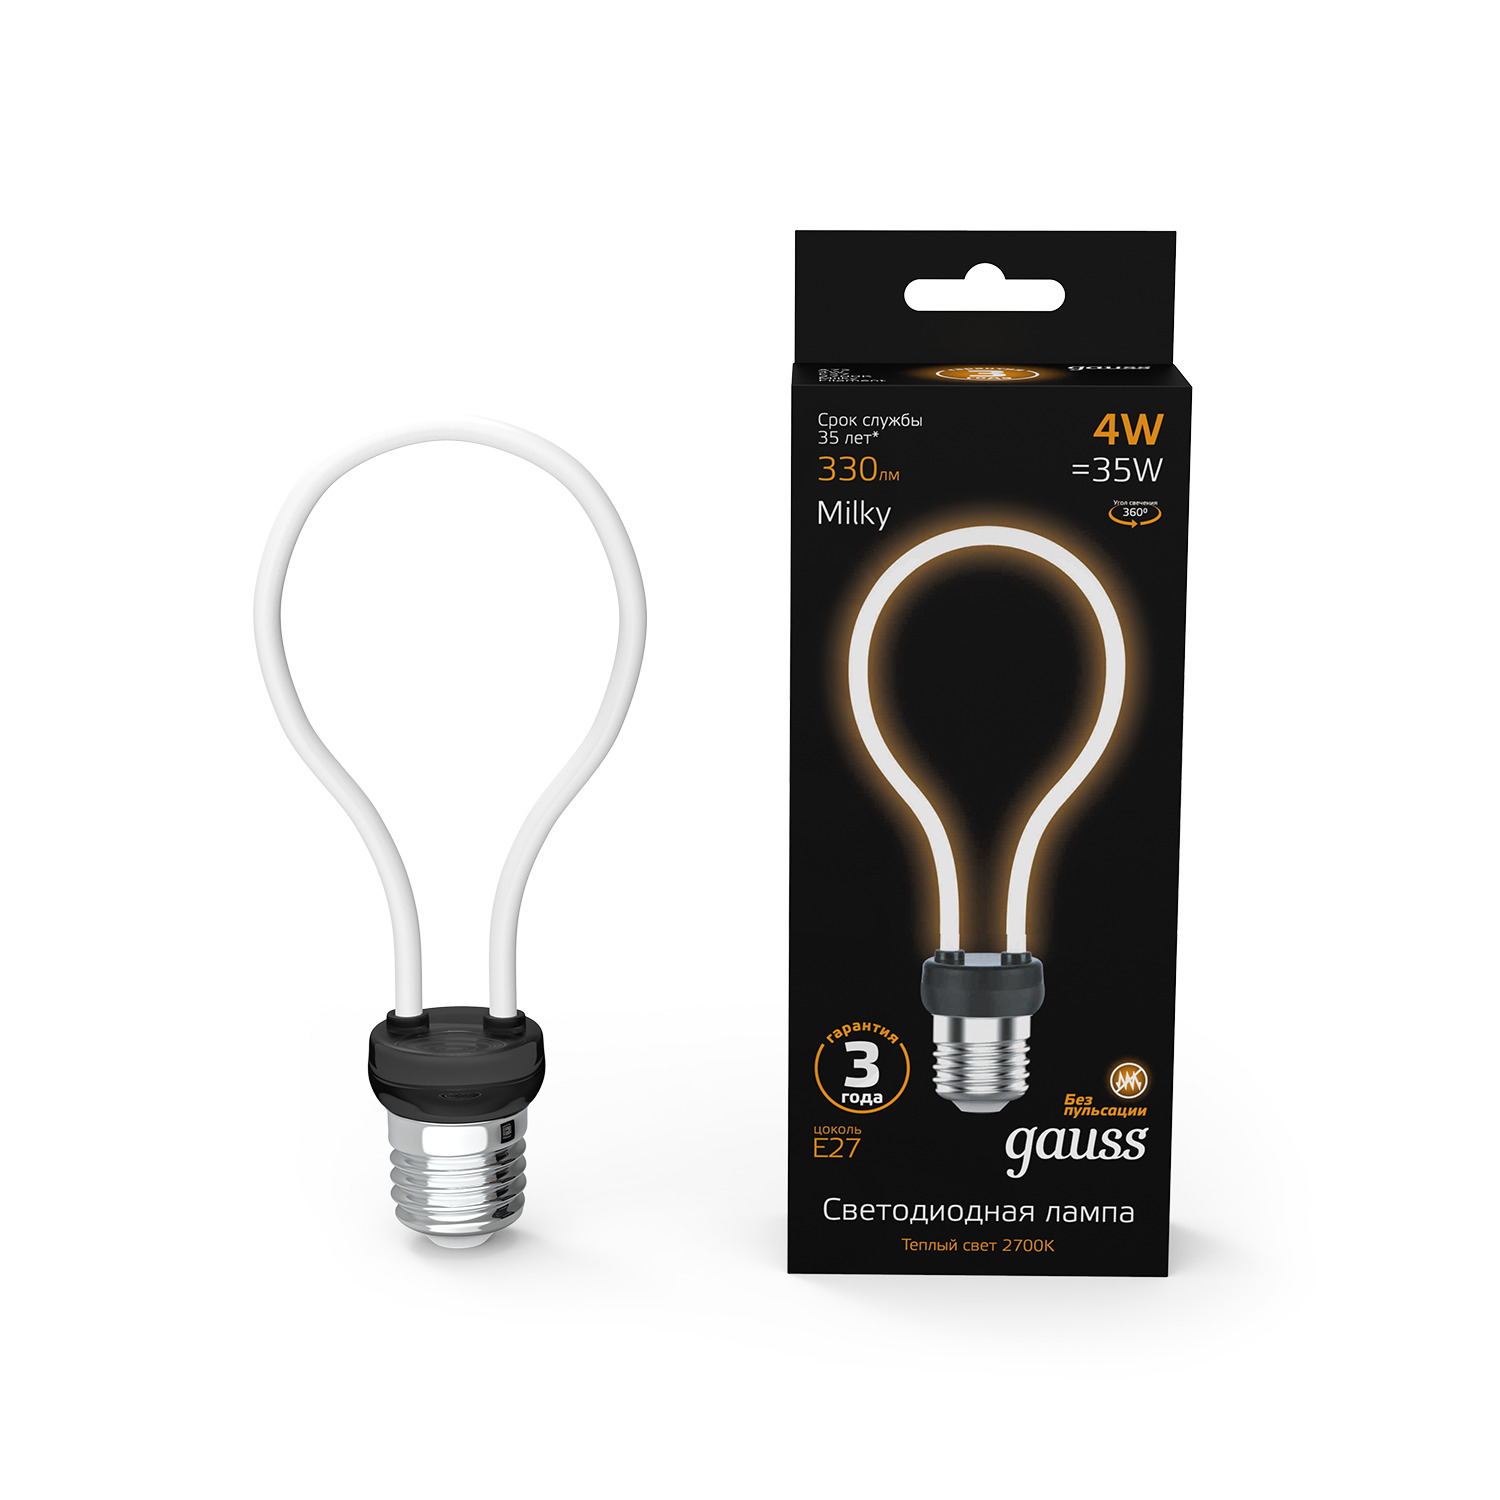 Лампа Gauss LED Filament Bulbless A72 Milky E27 4W 330 Лм 2700K 72x160мм лампа gauss led filament bulbless star milky e27 7w 330 лм 2700k 135x195мм